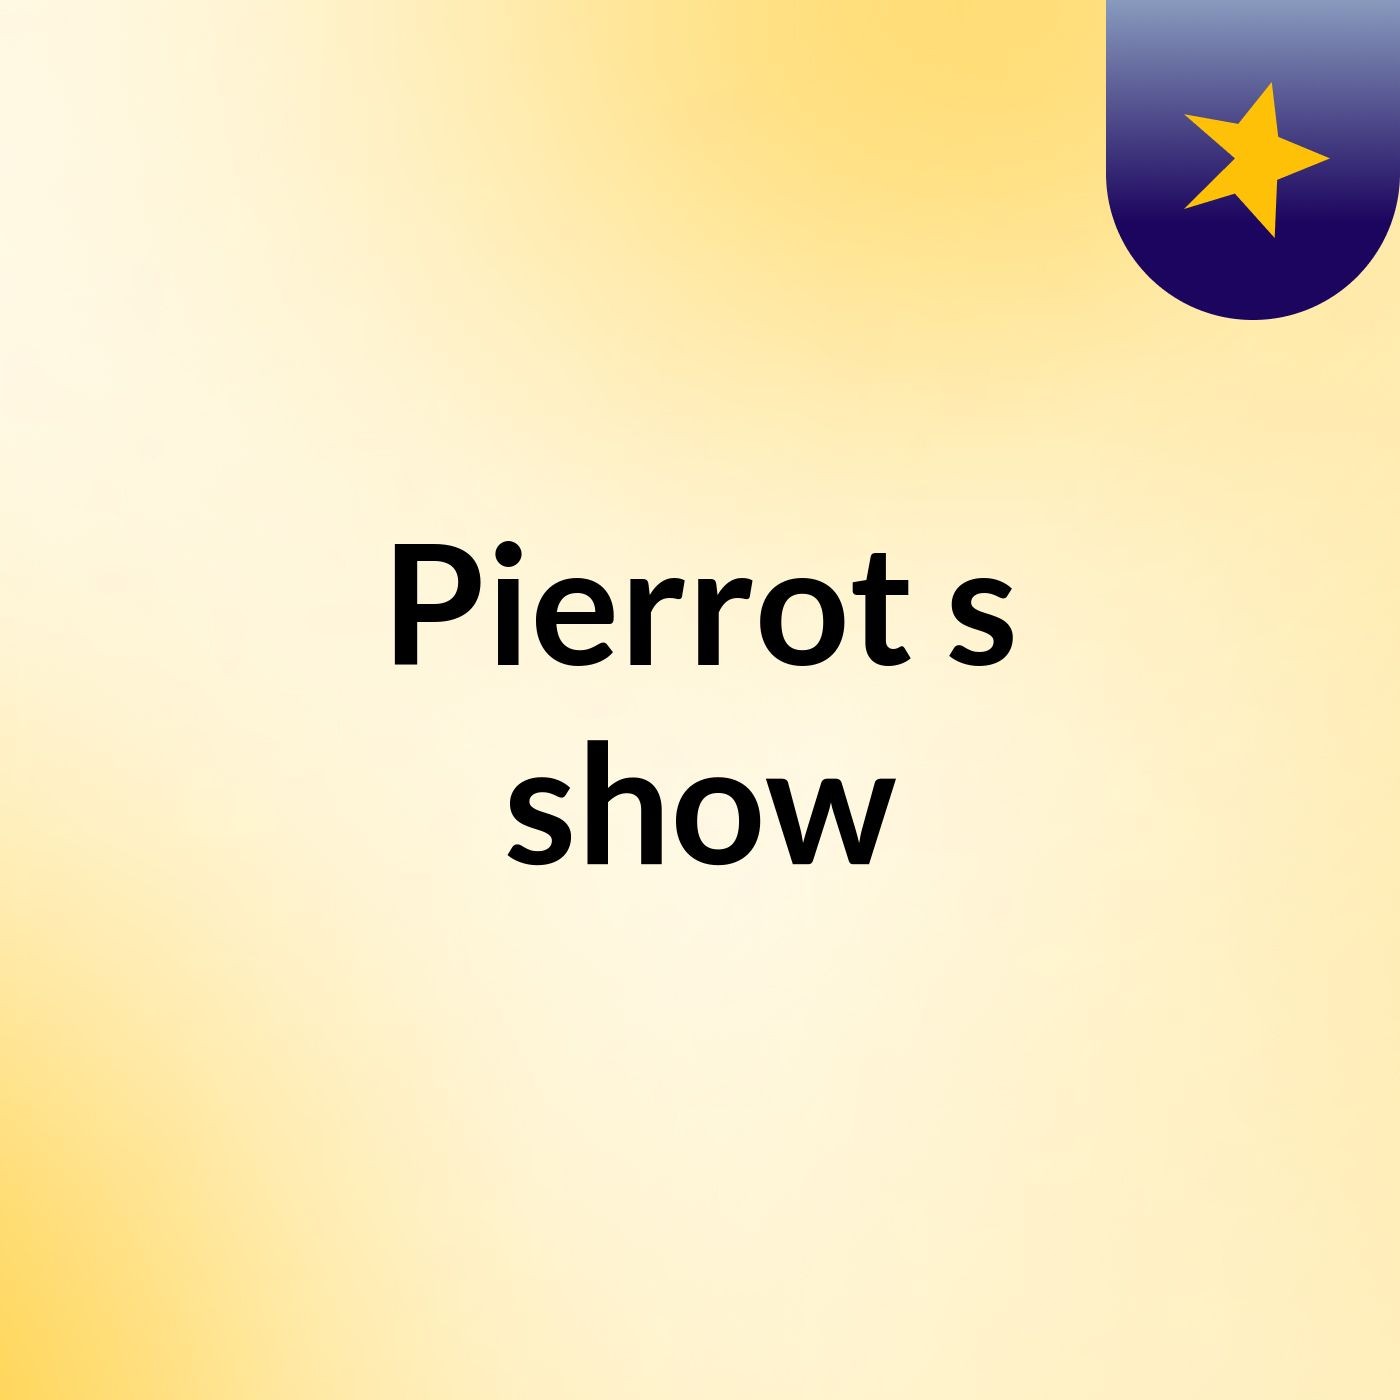 Pierrot's show